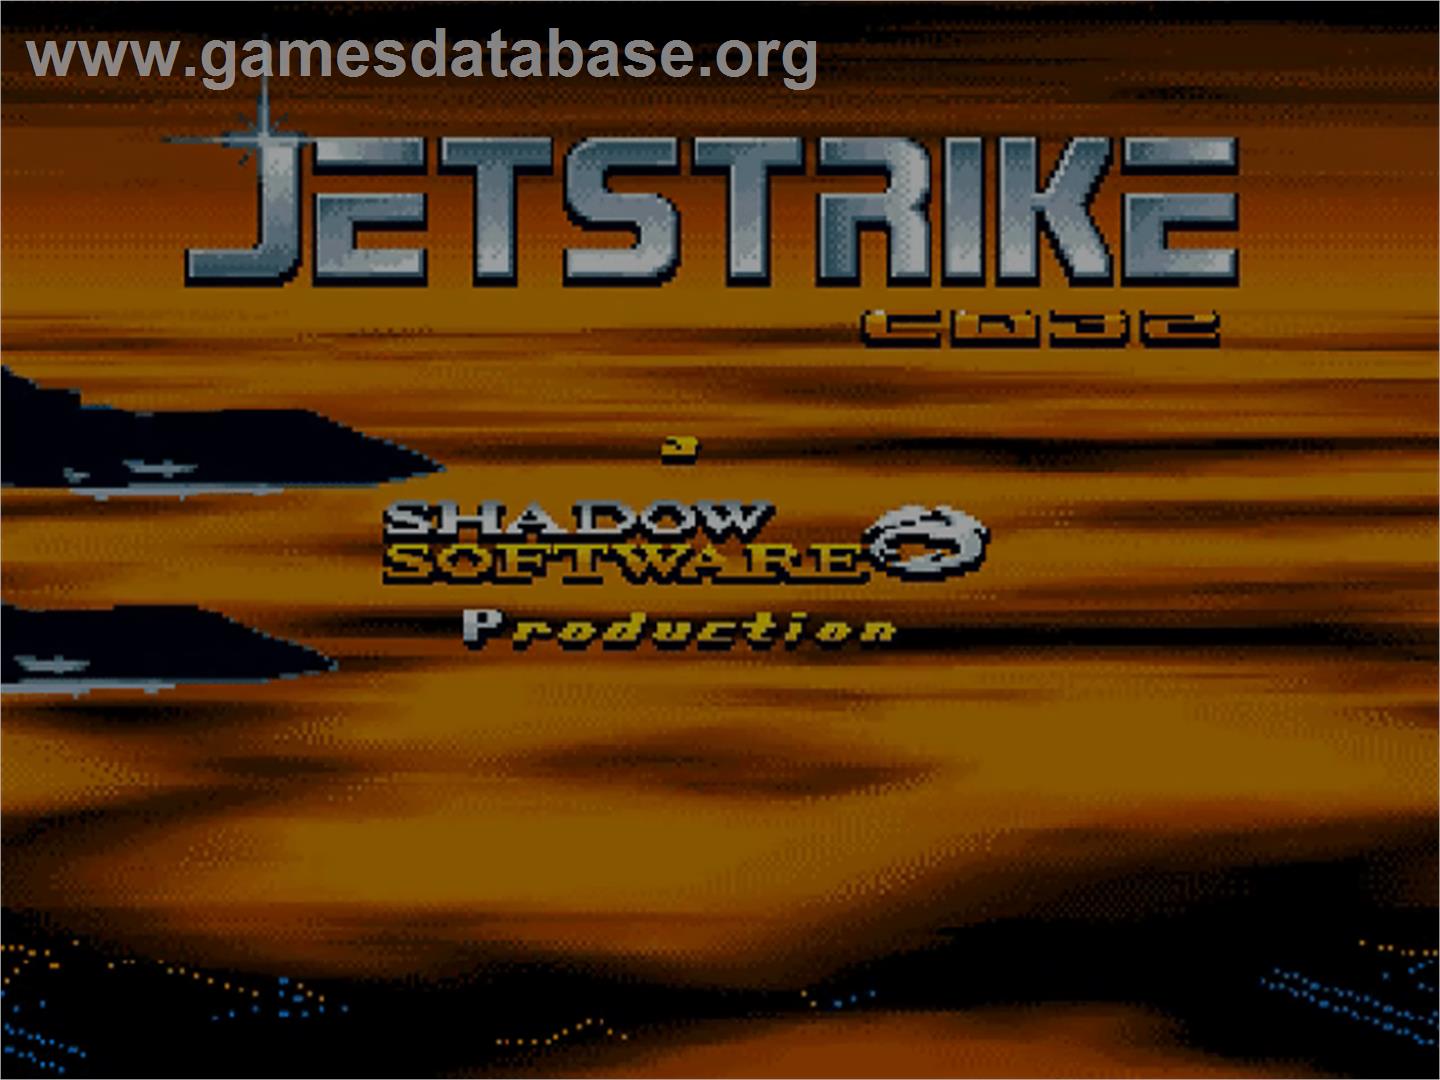 Jet Strike - Commodore Amiga CD32 - Artwork - Title Screen